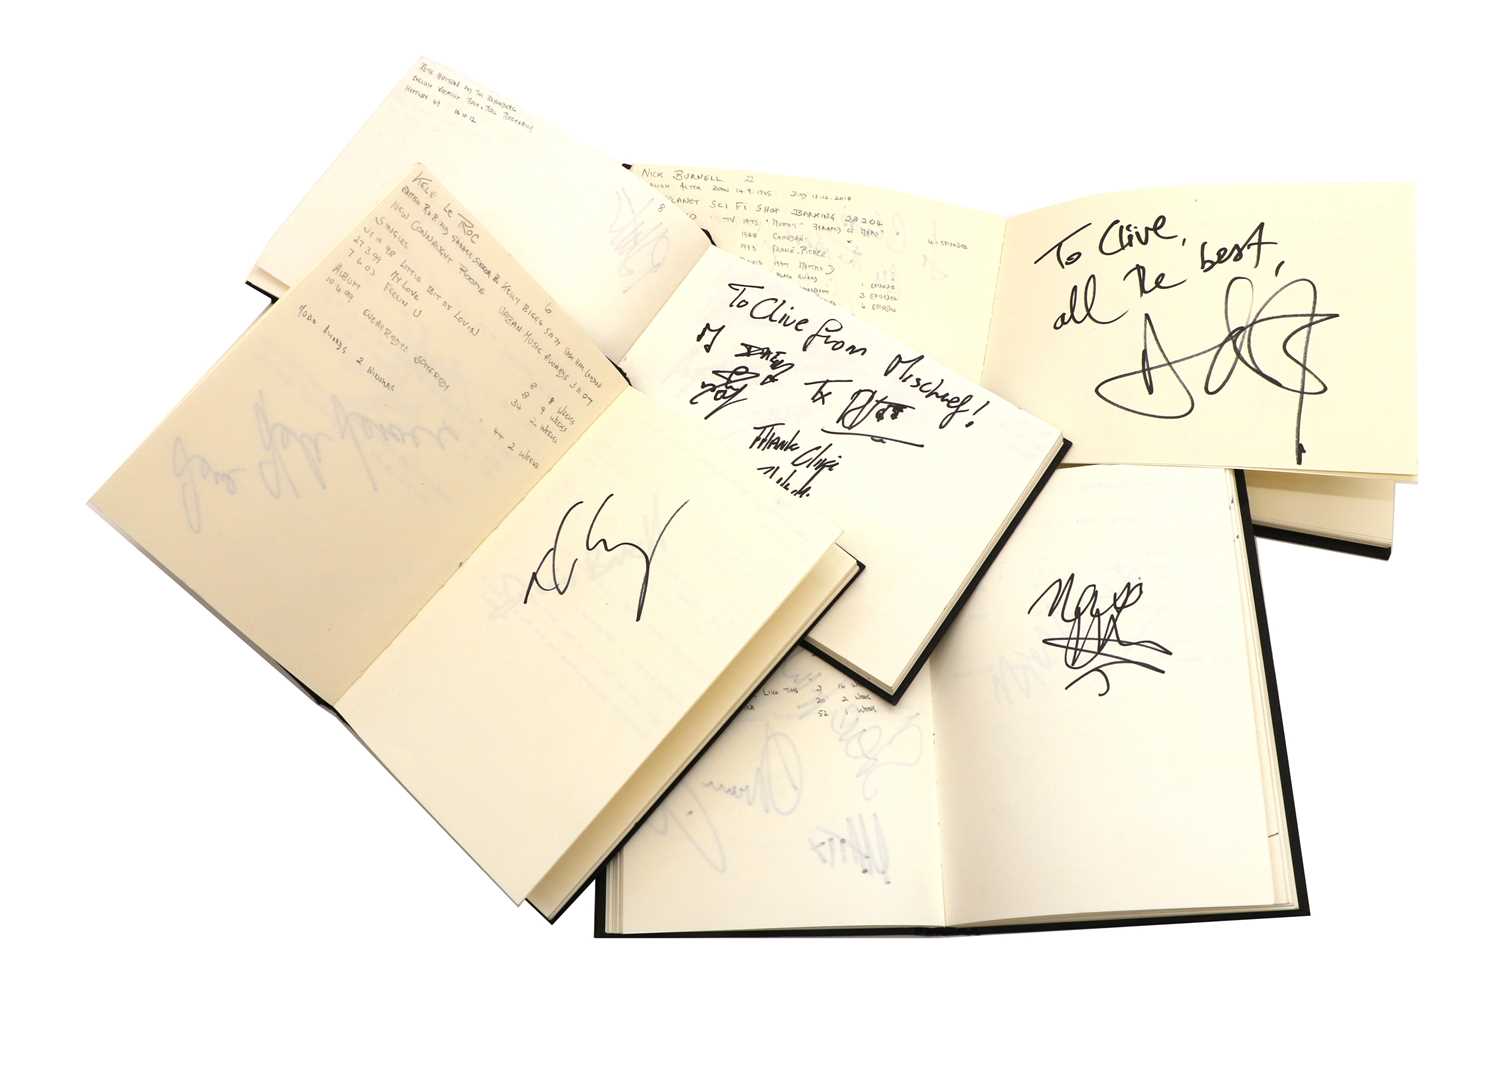 A collection of autograph albums